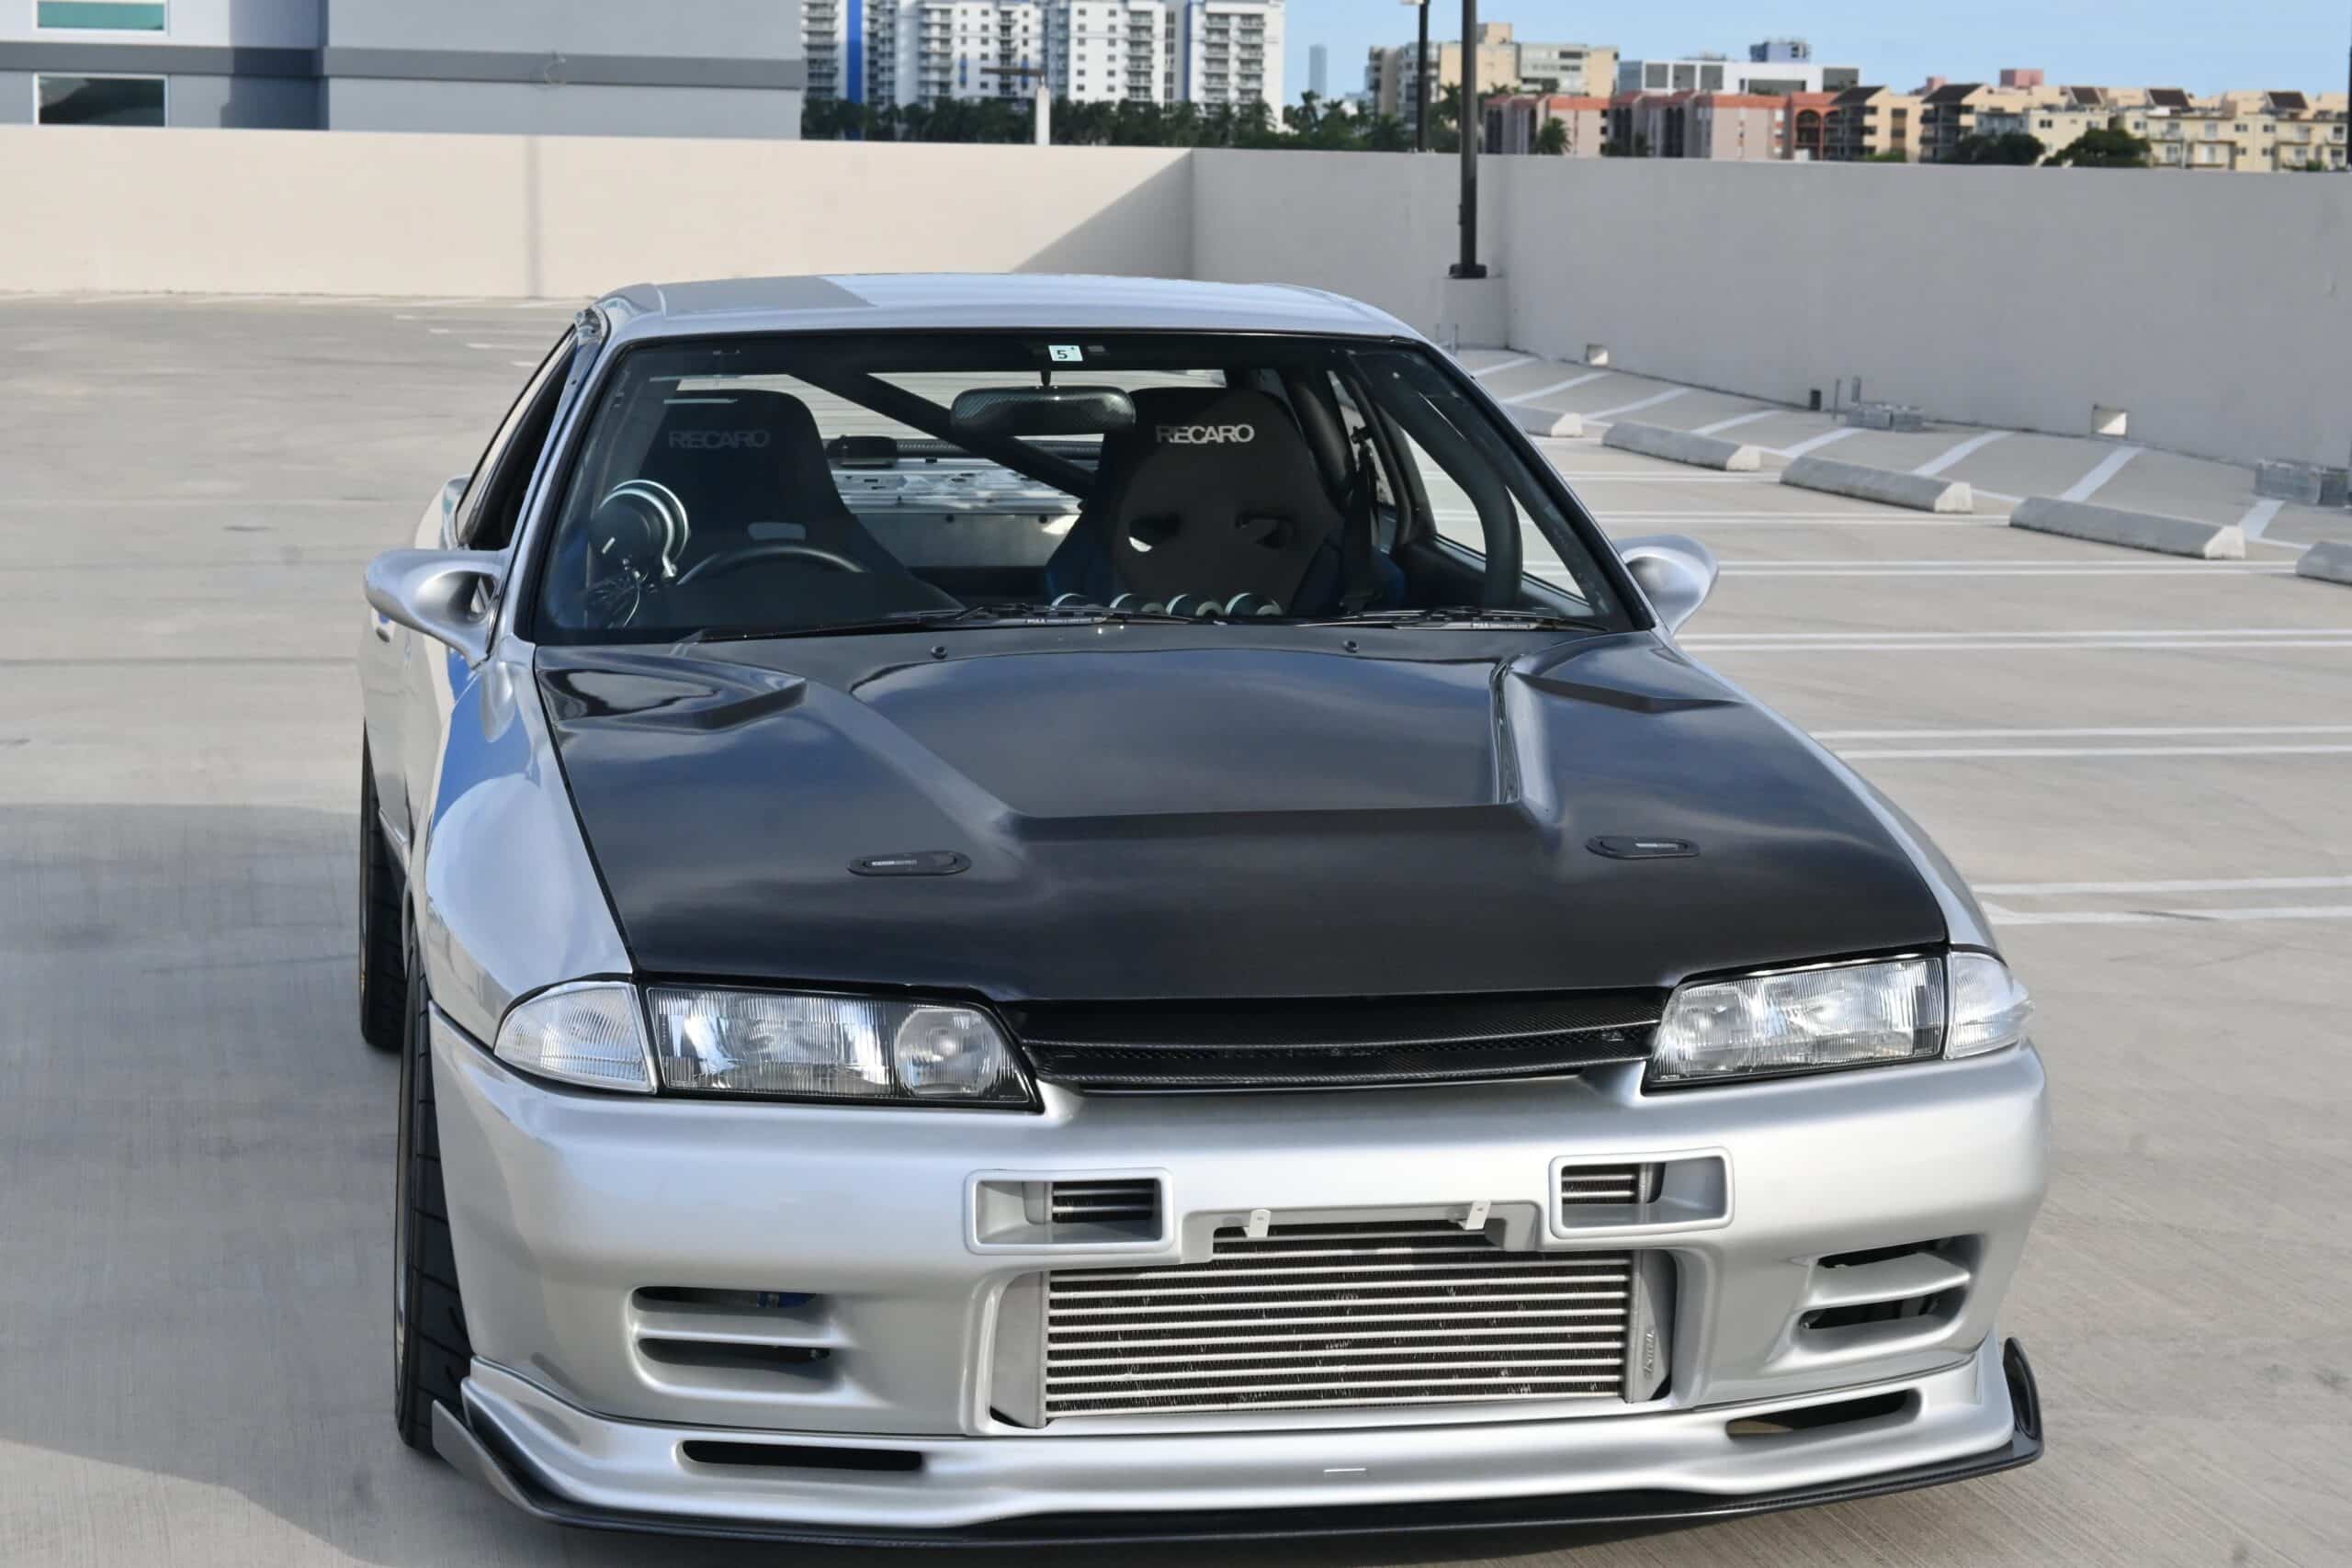 1994 Nissan GT-R R32 SKYLINE 2.7L HKS RB26 | Trust 6 Speed Dogbox | Greddy T517Z Turbos |1:00 flat Tsukuba